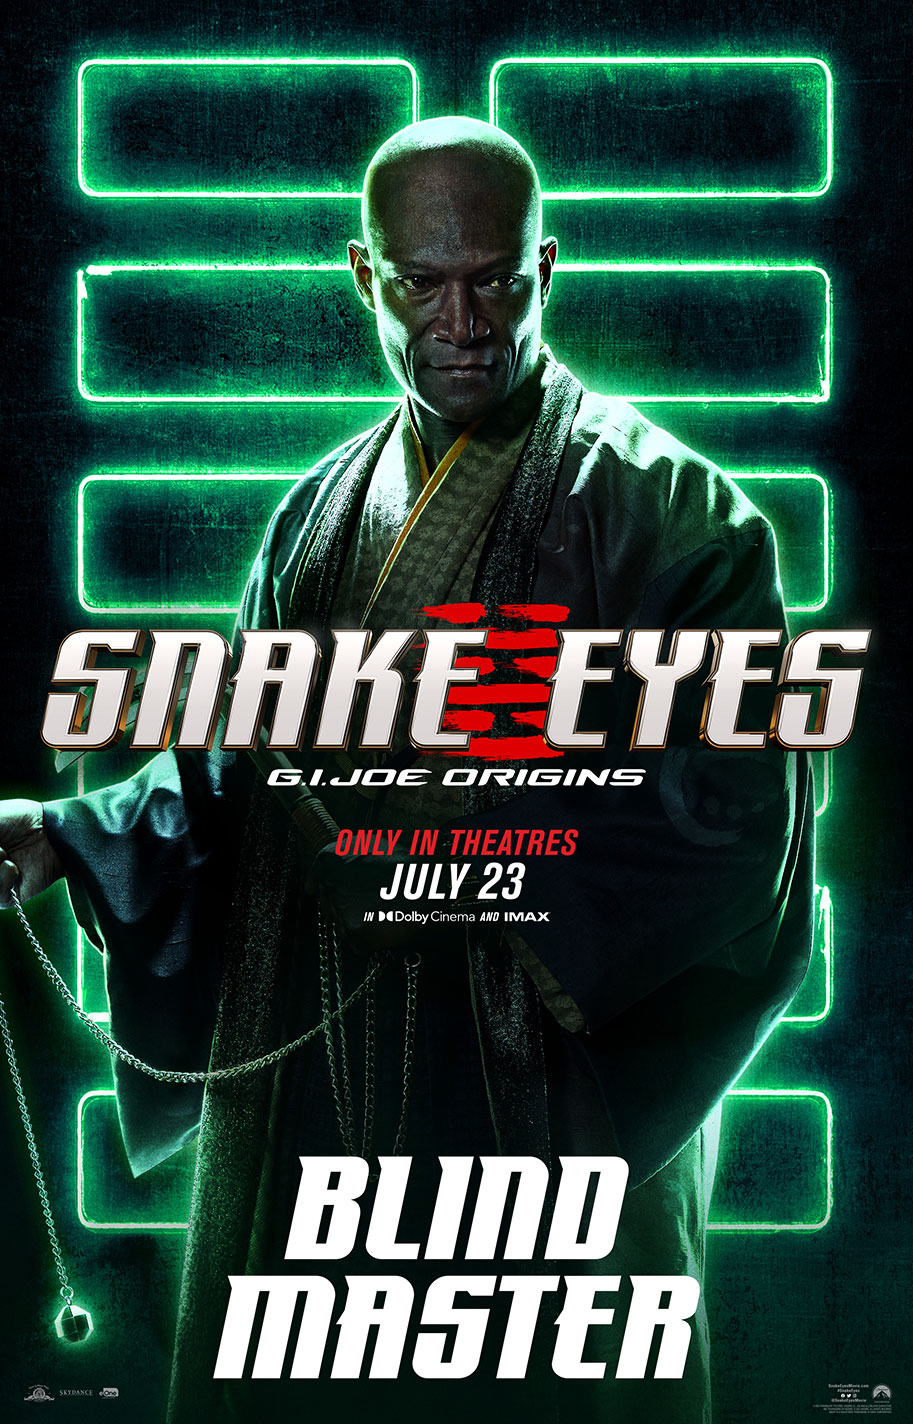 Snake Eyes: G.I. Joe Origins film gets new character posters